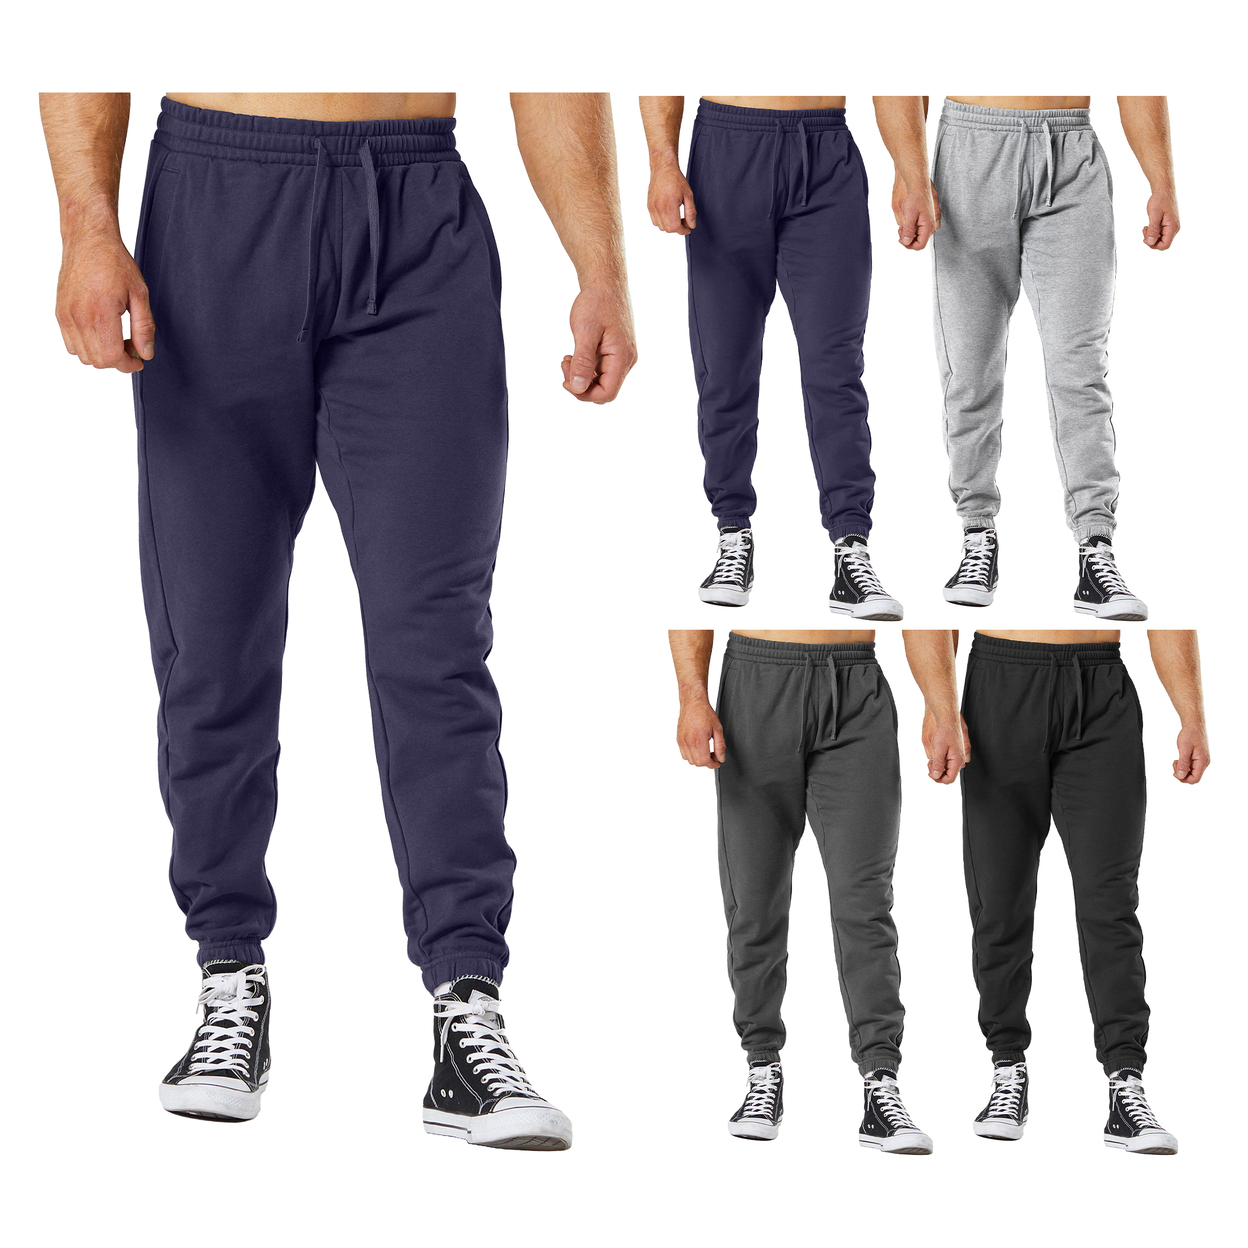 2-Pack: Men's Ultra-Soft Cozy Winter Warm Casual Fleece-Lined Sweatpants Jogger - Black & Grey, Large